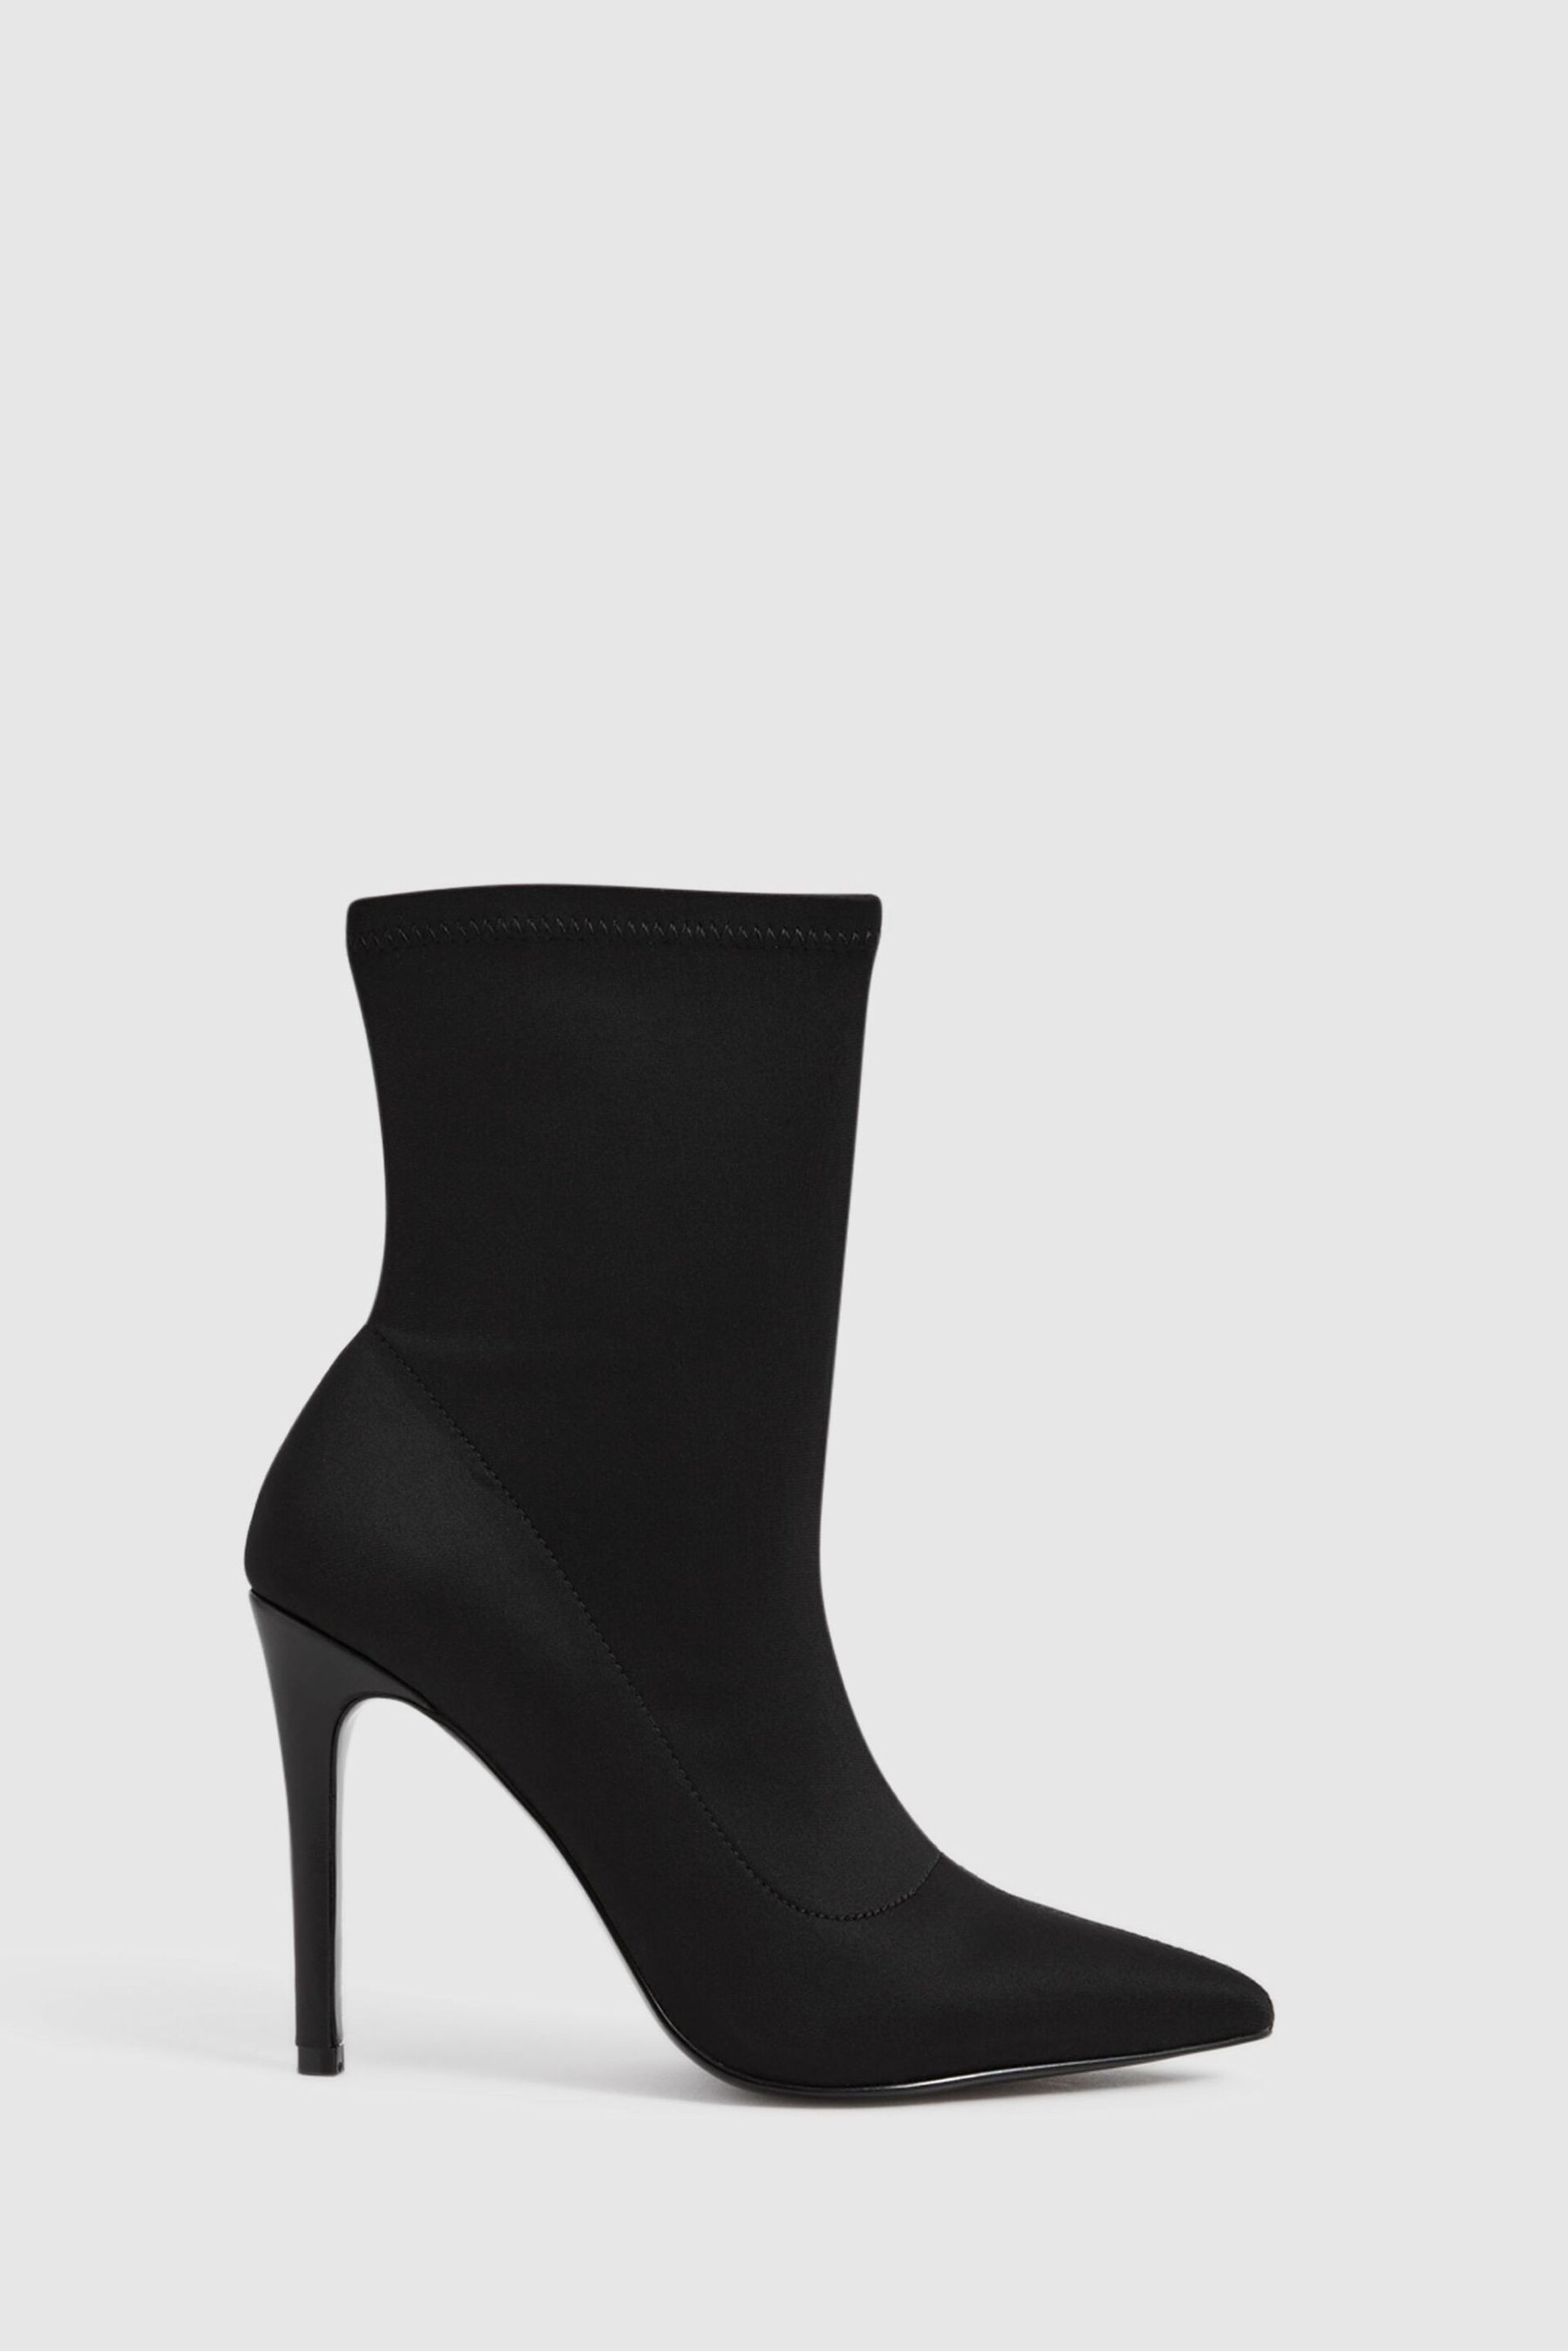 Reiss Black Dakota Heeled Sock Boots - Image 1 of 6